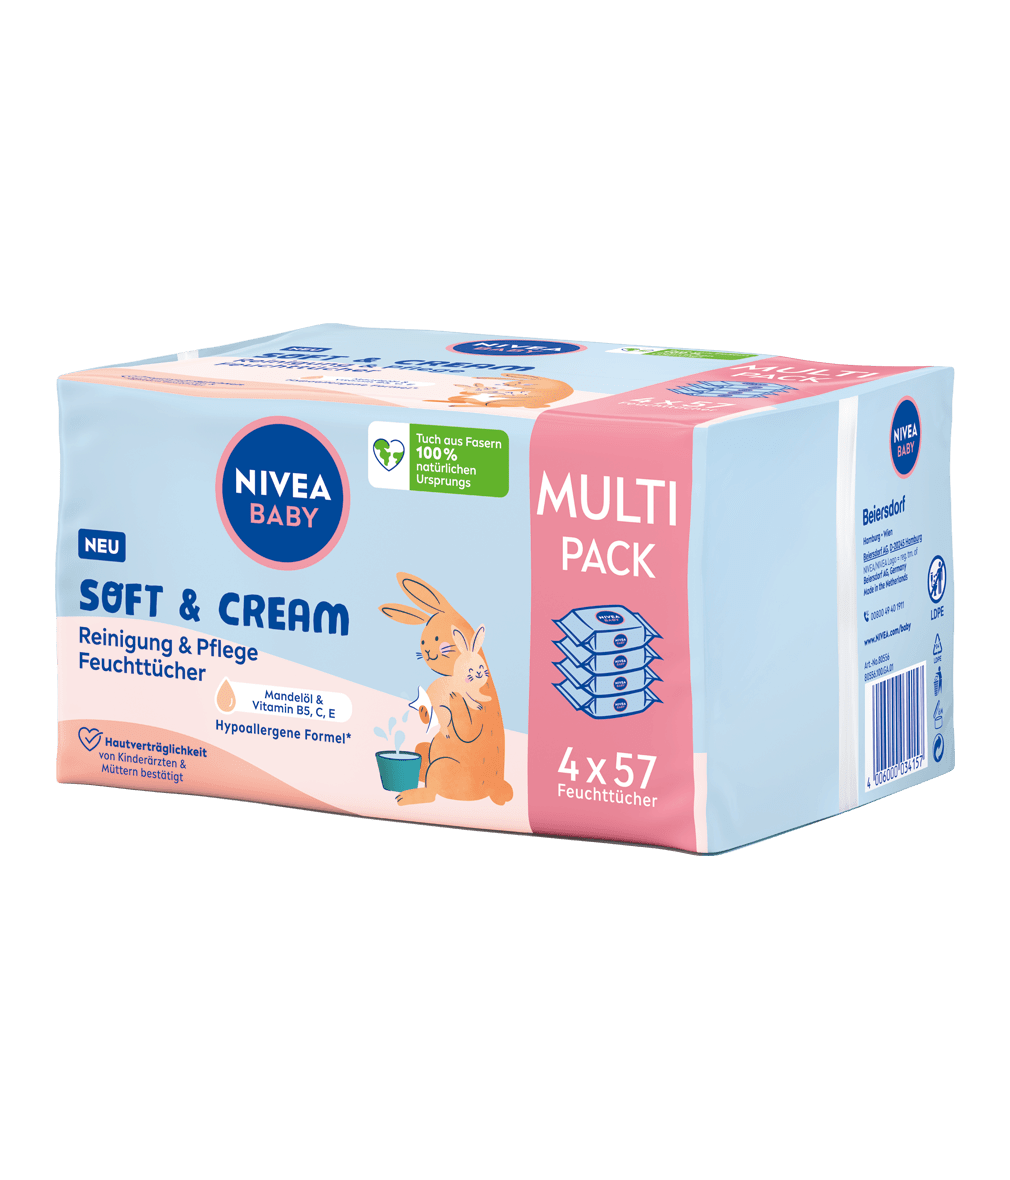 NIVEA Baby Soft & Cream Reinigung & Pflege Feuchttücher_4x57pcs.